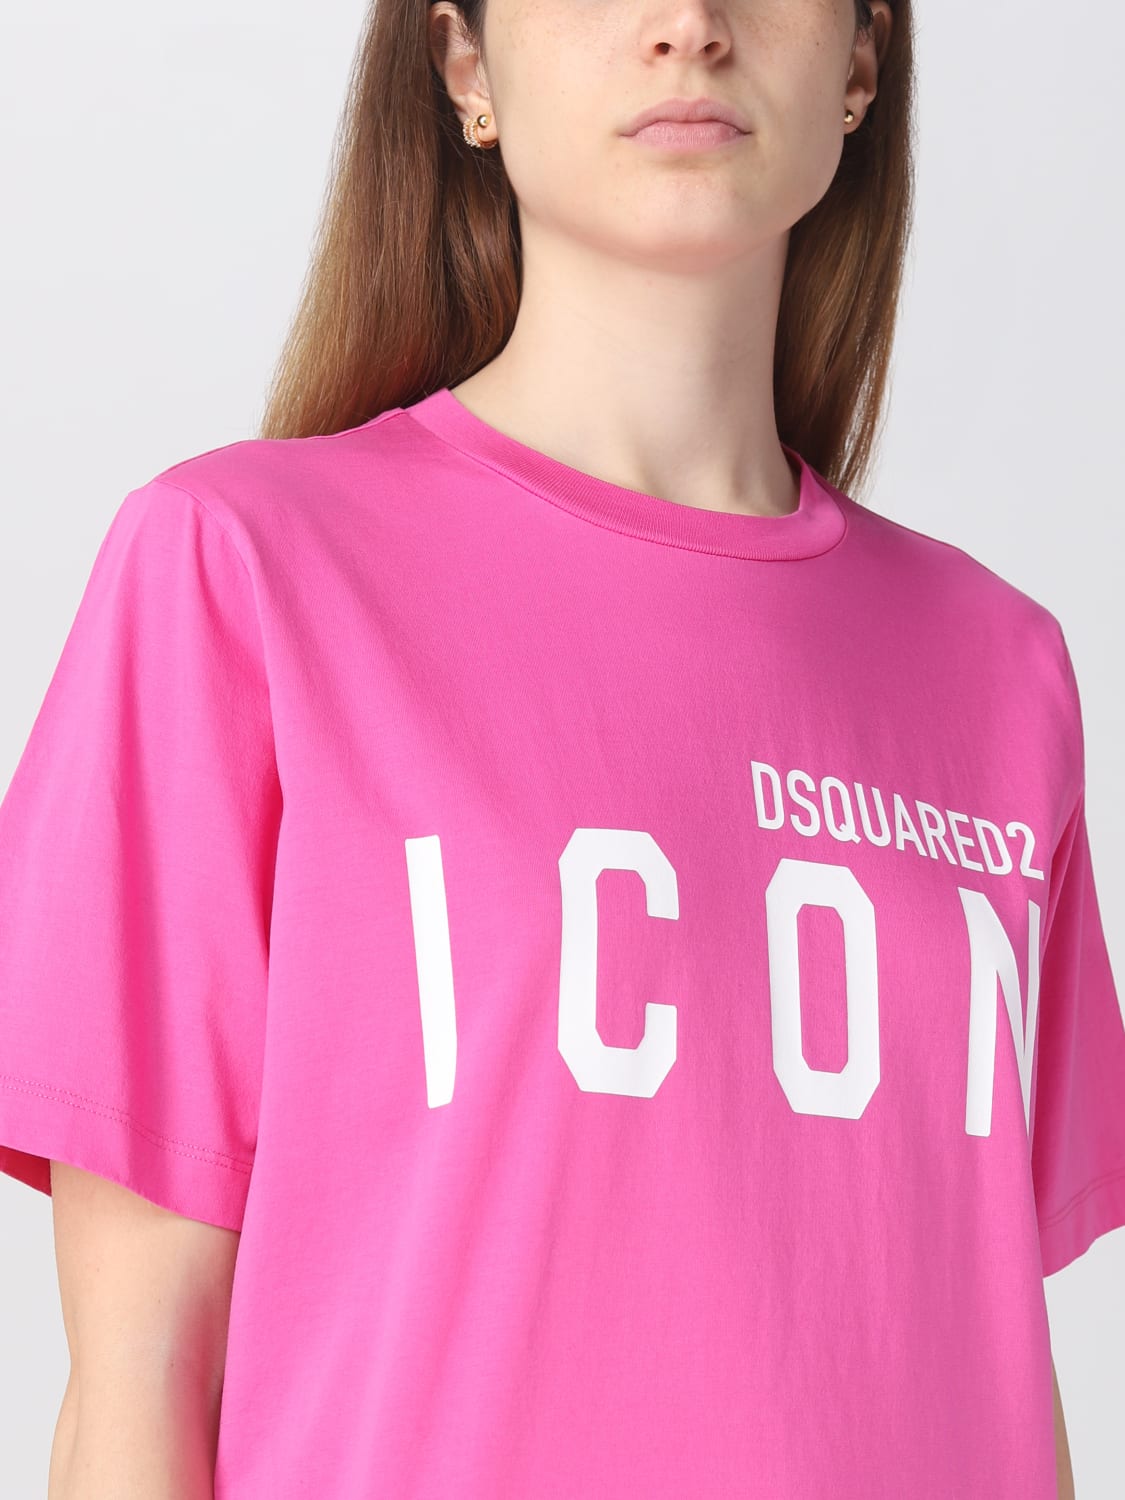 DSQUARED2 グラフィック マウス ロゴTシャツ 20ss pink-